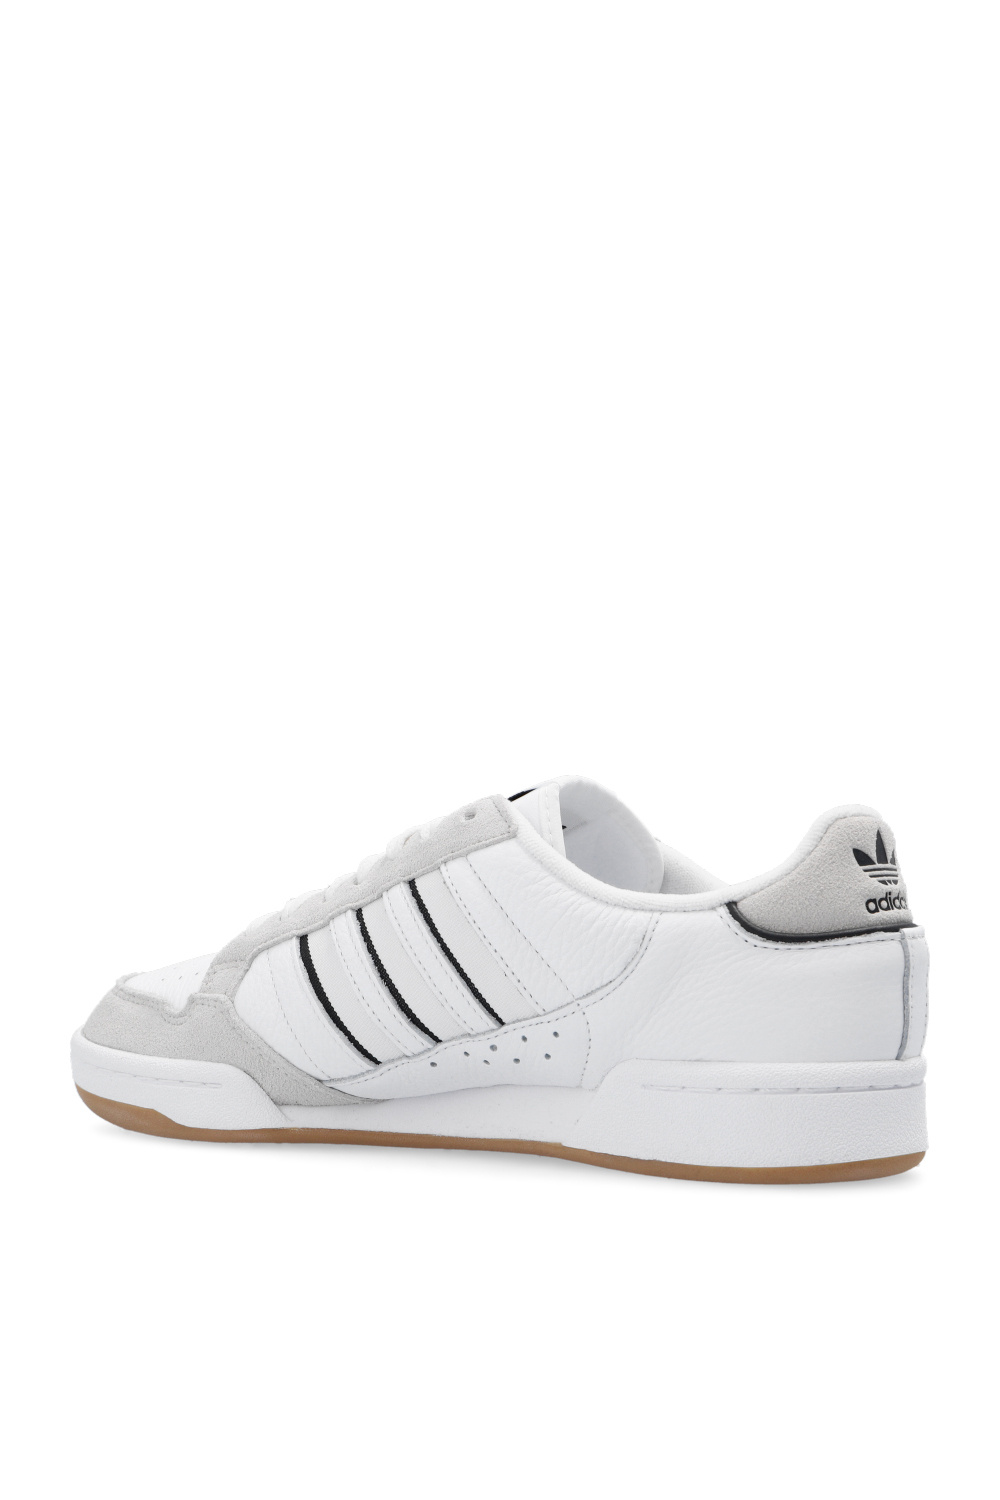 Stripes\' ADIDAS - adidas 80 Originals - 2971 Beige \'Continental StclaircomoShops Germany Originals sneakers